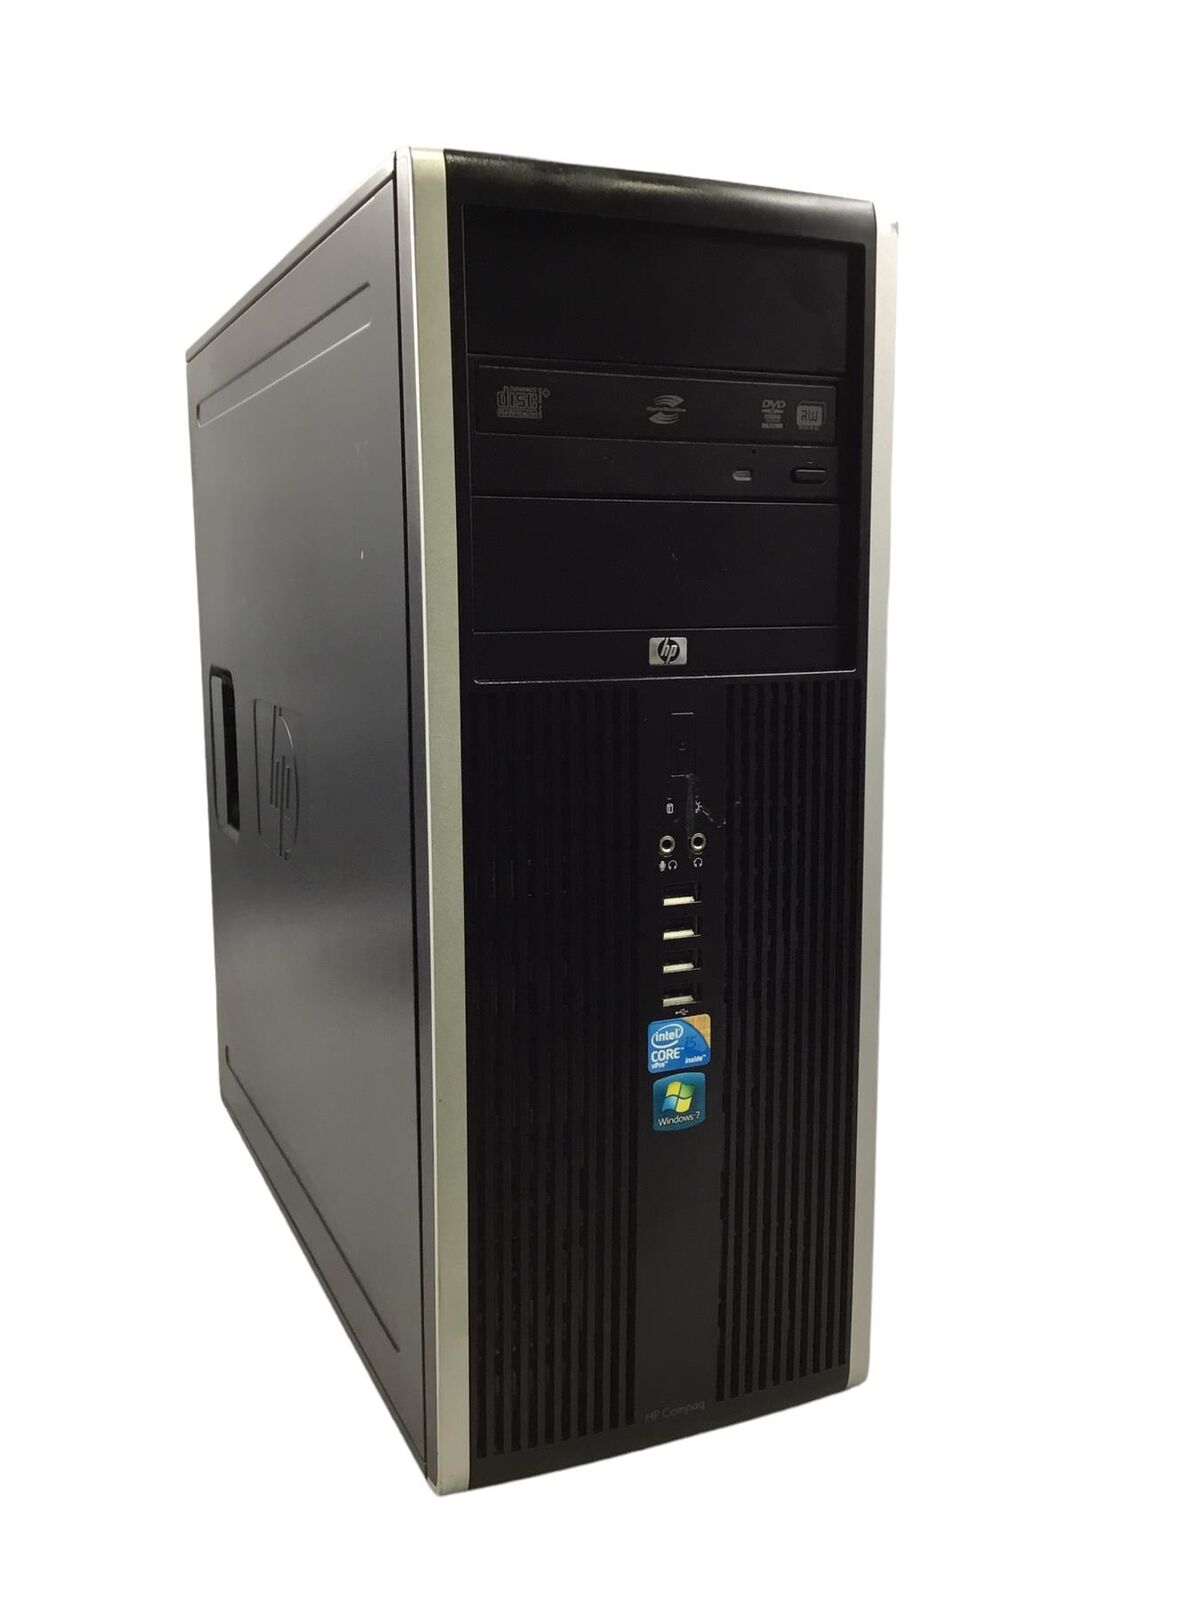 HP Compaq 8100 Elite Tower i5-650 3.20GHz 8GB DVDRW NO HD NO OS